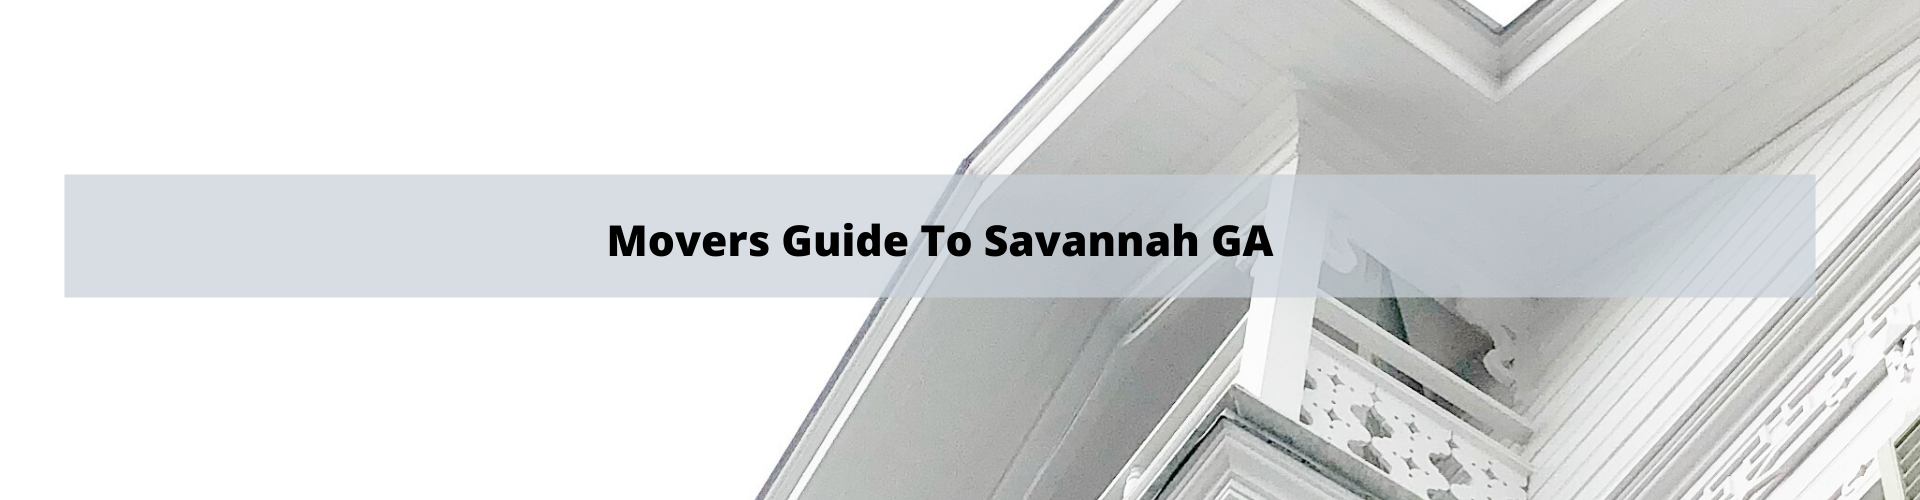 Movers Guide to Savannah GA